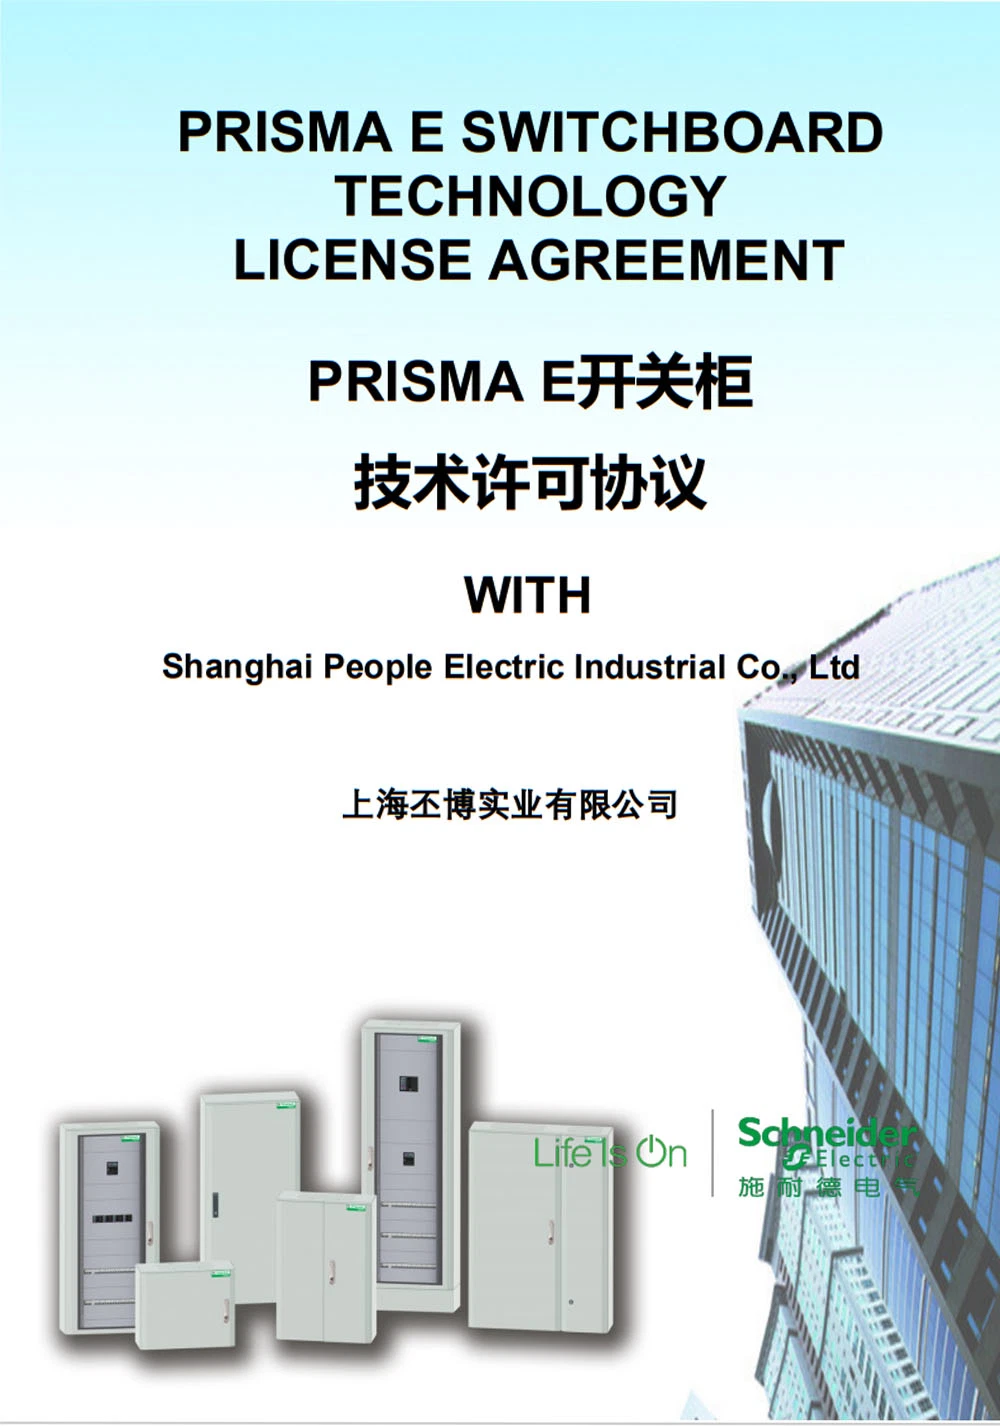 Schneider Switch Panel Prisma E Control Panel 440VAC/400VAC/50Hz/60Hz